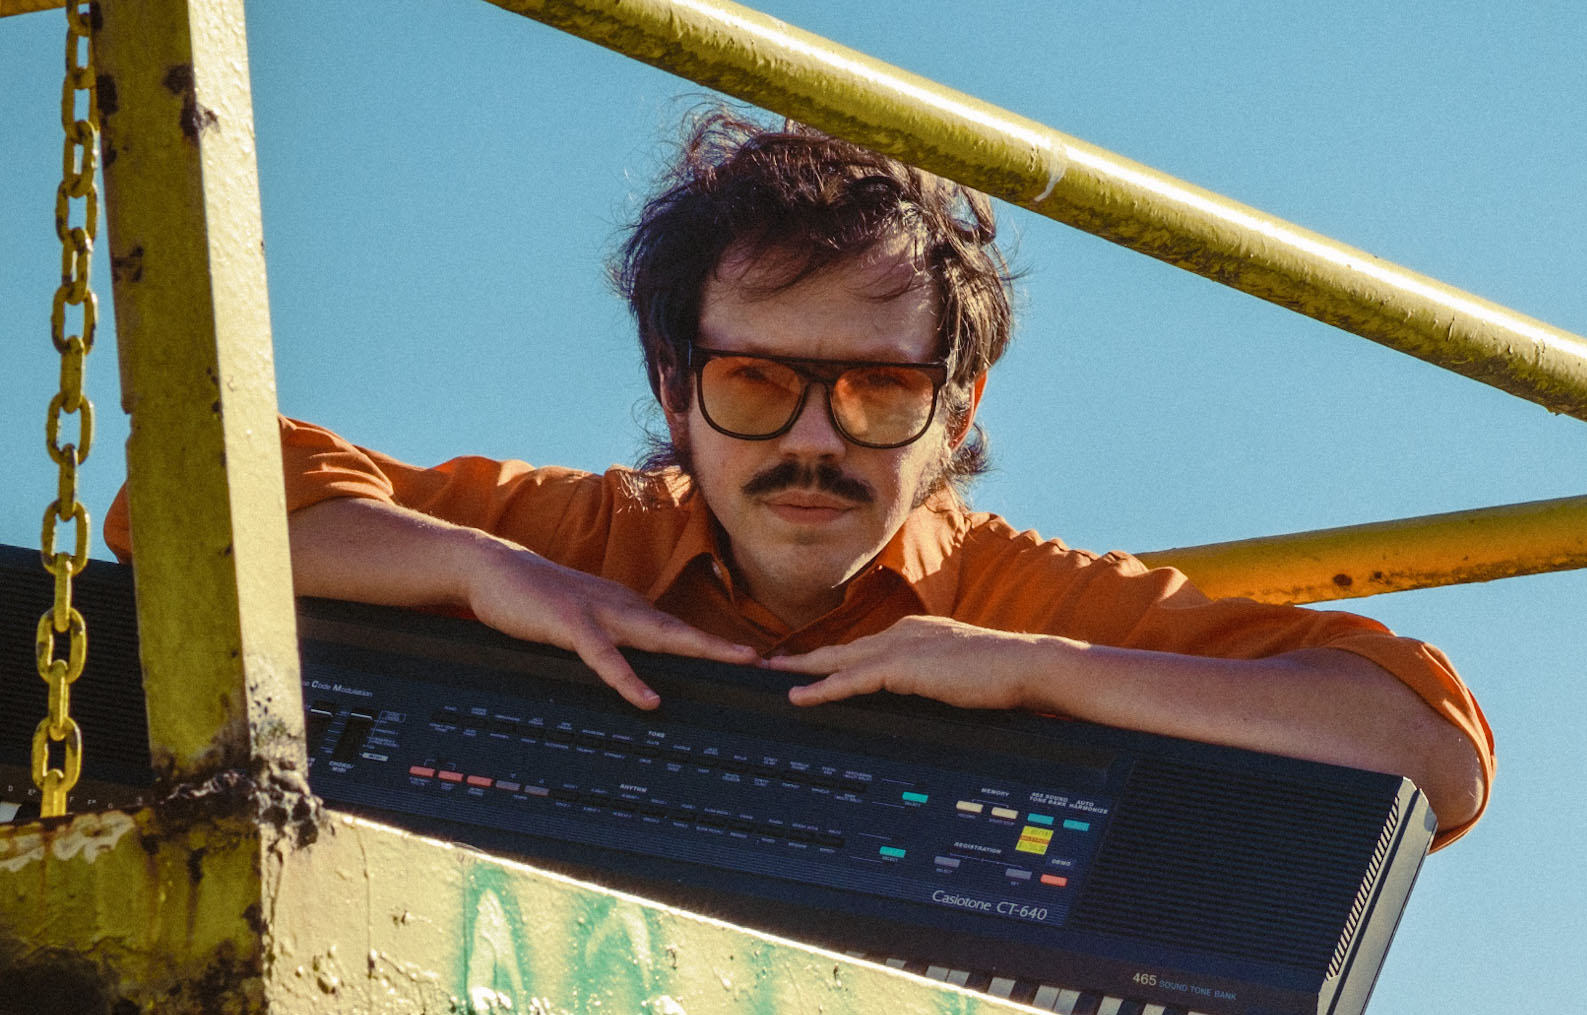 Brett Sisun in sunglasses with a keyboard.